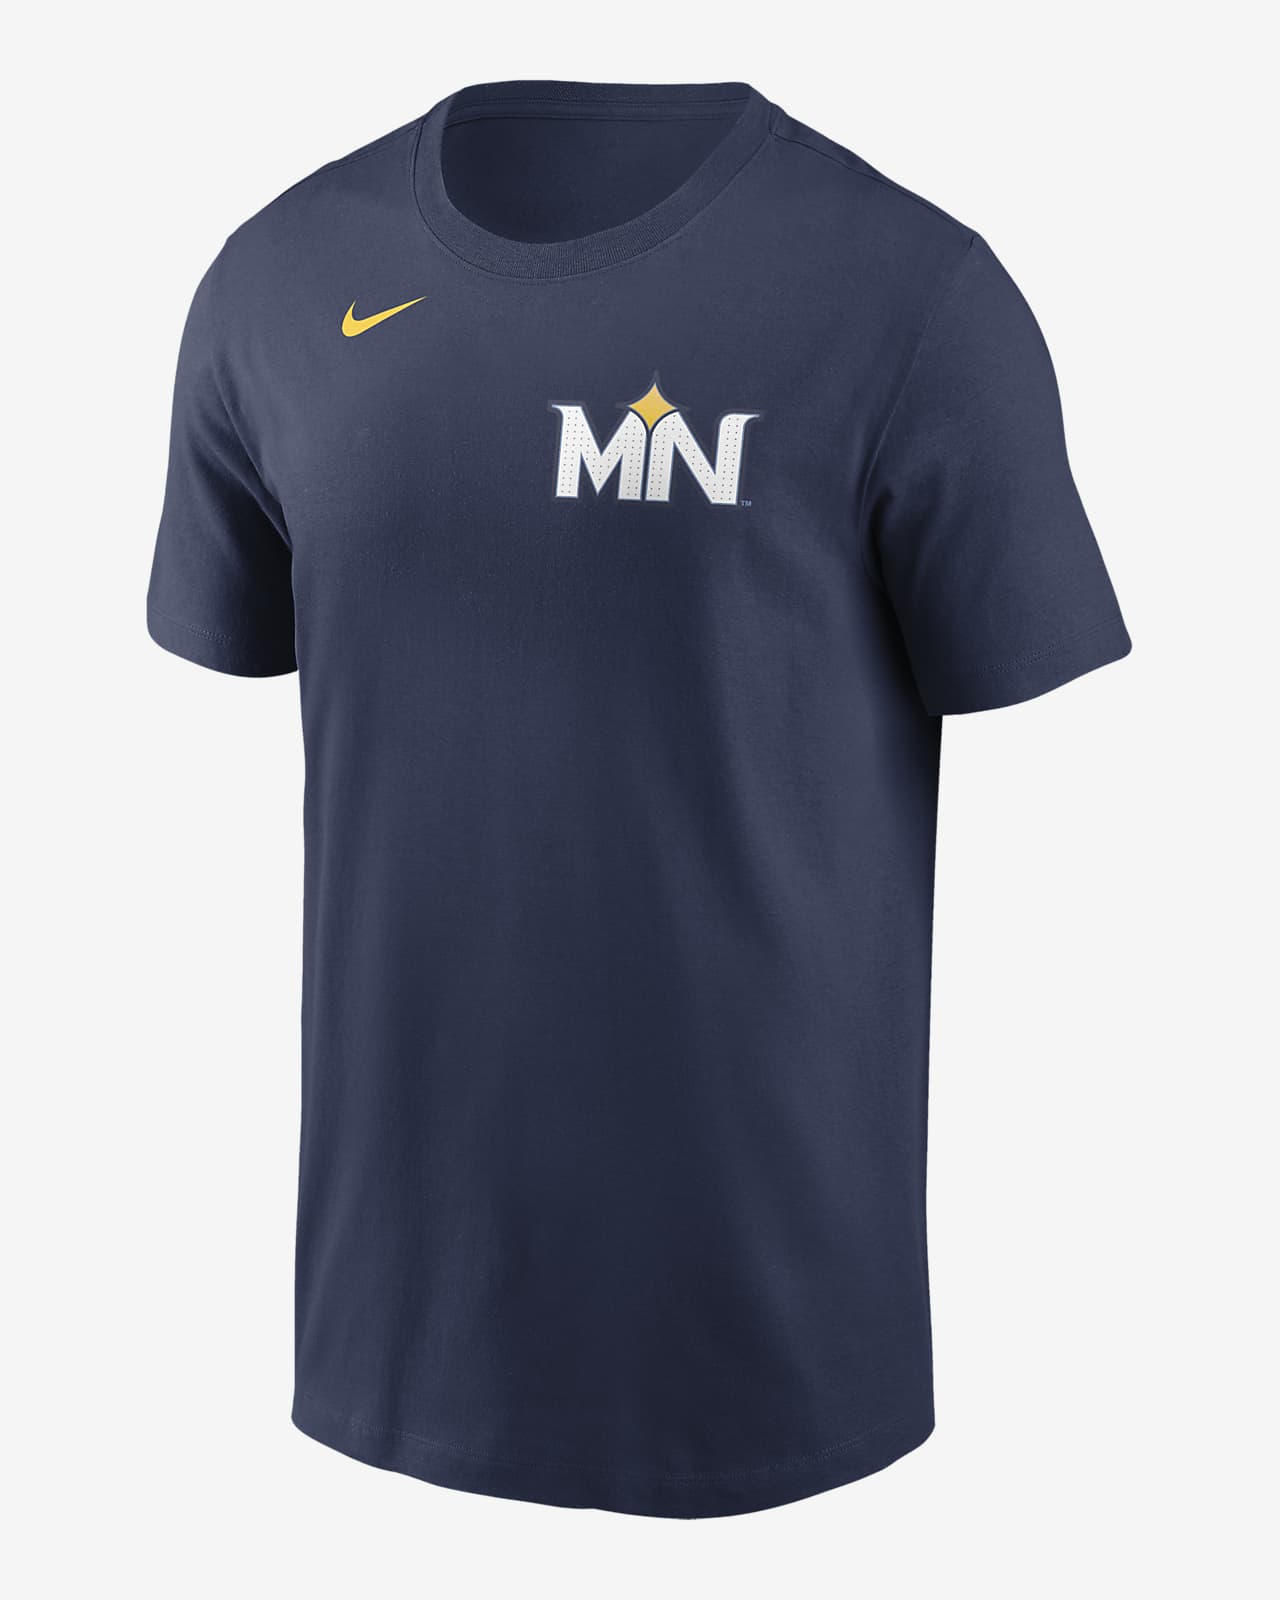 Carlos Correa Minnesota Twins City Connect Fuse Men's Nike MLB T-Shirt